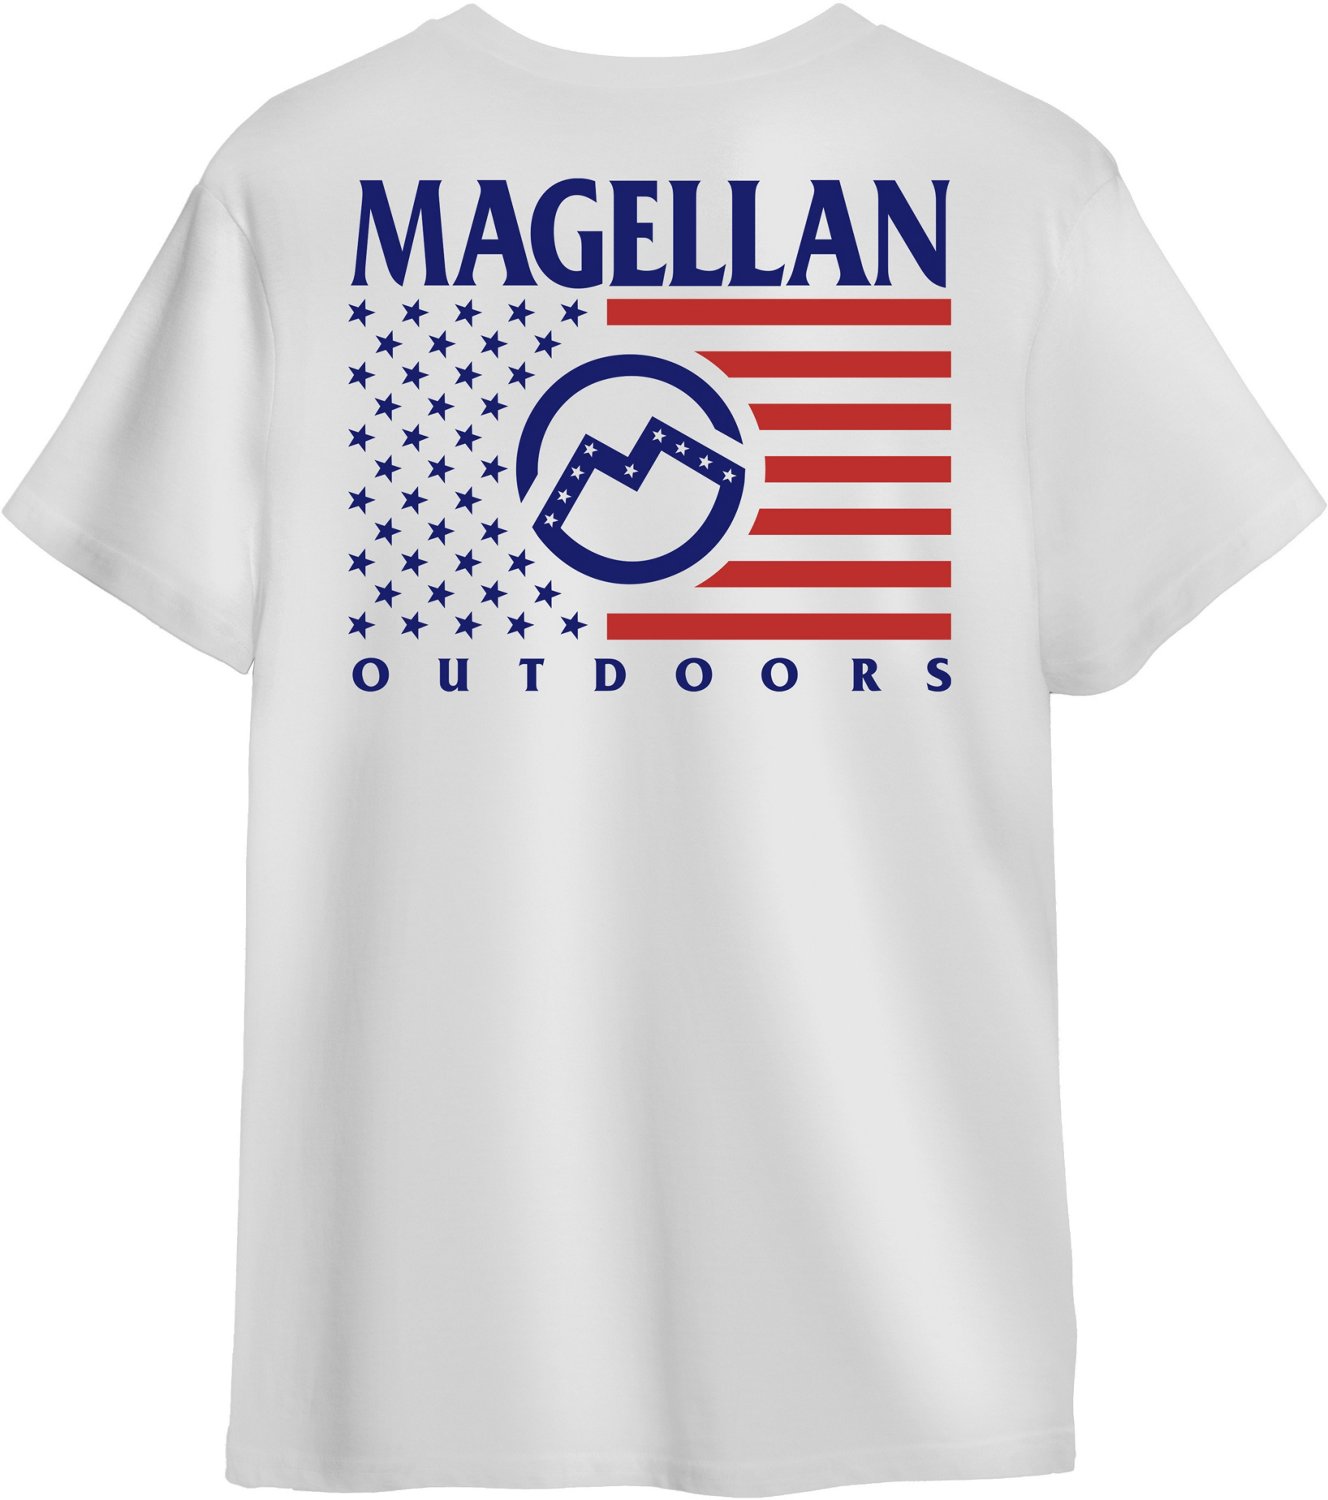 Magellan Outdoors, Tops